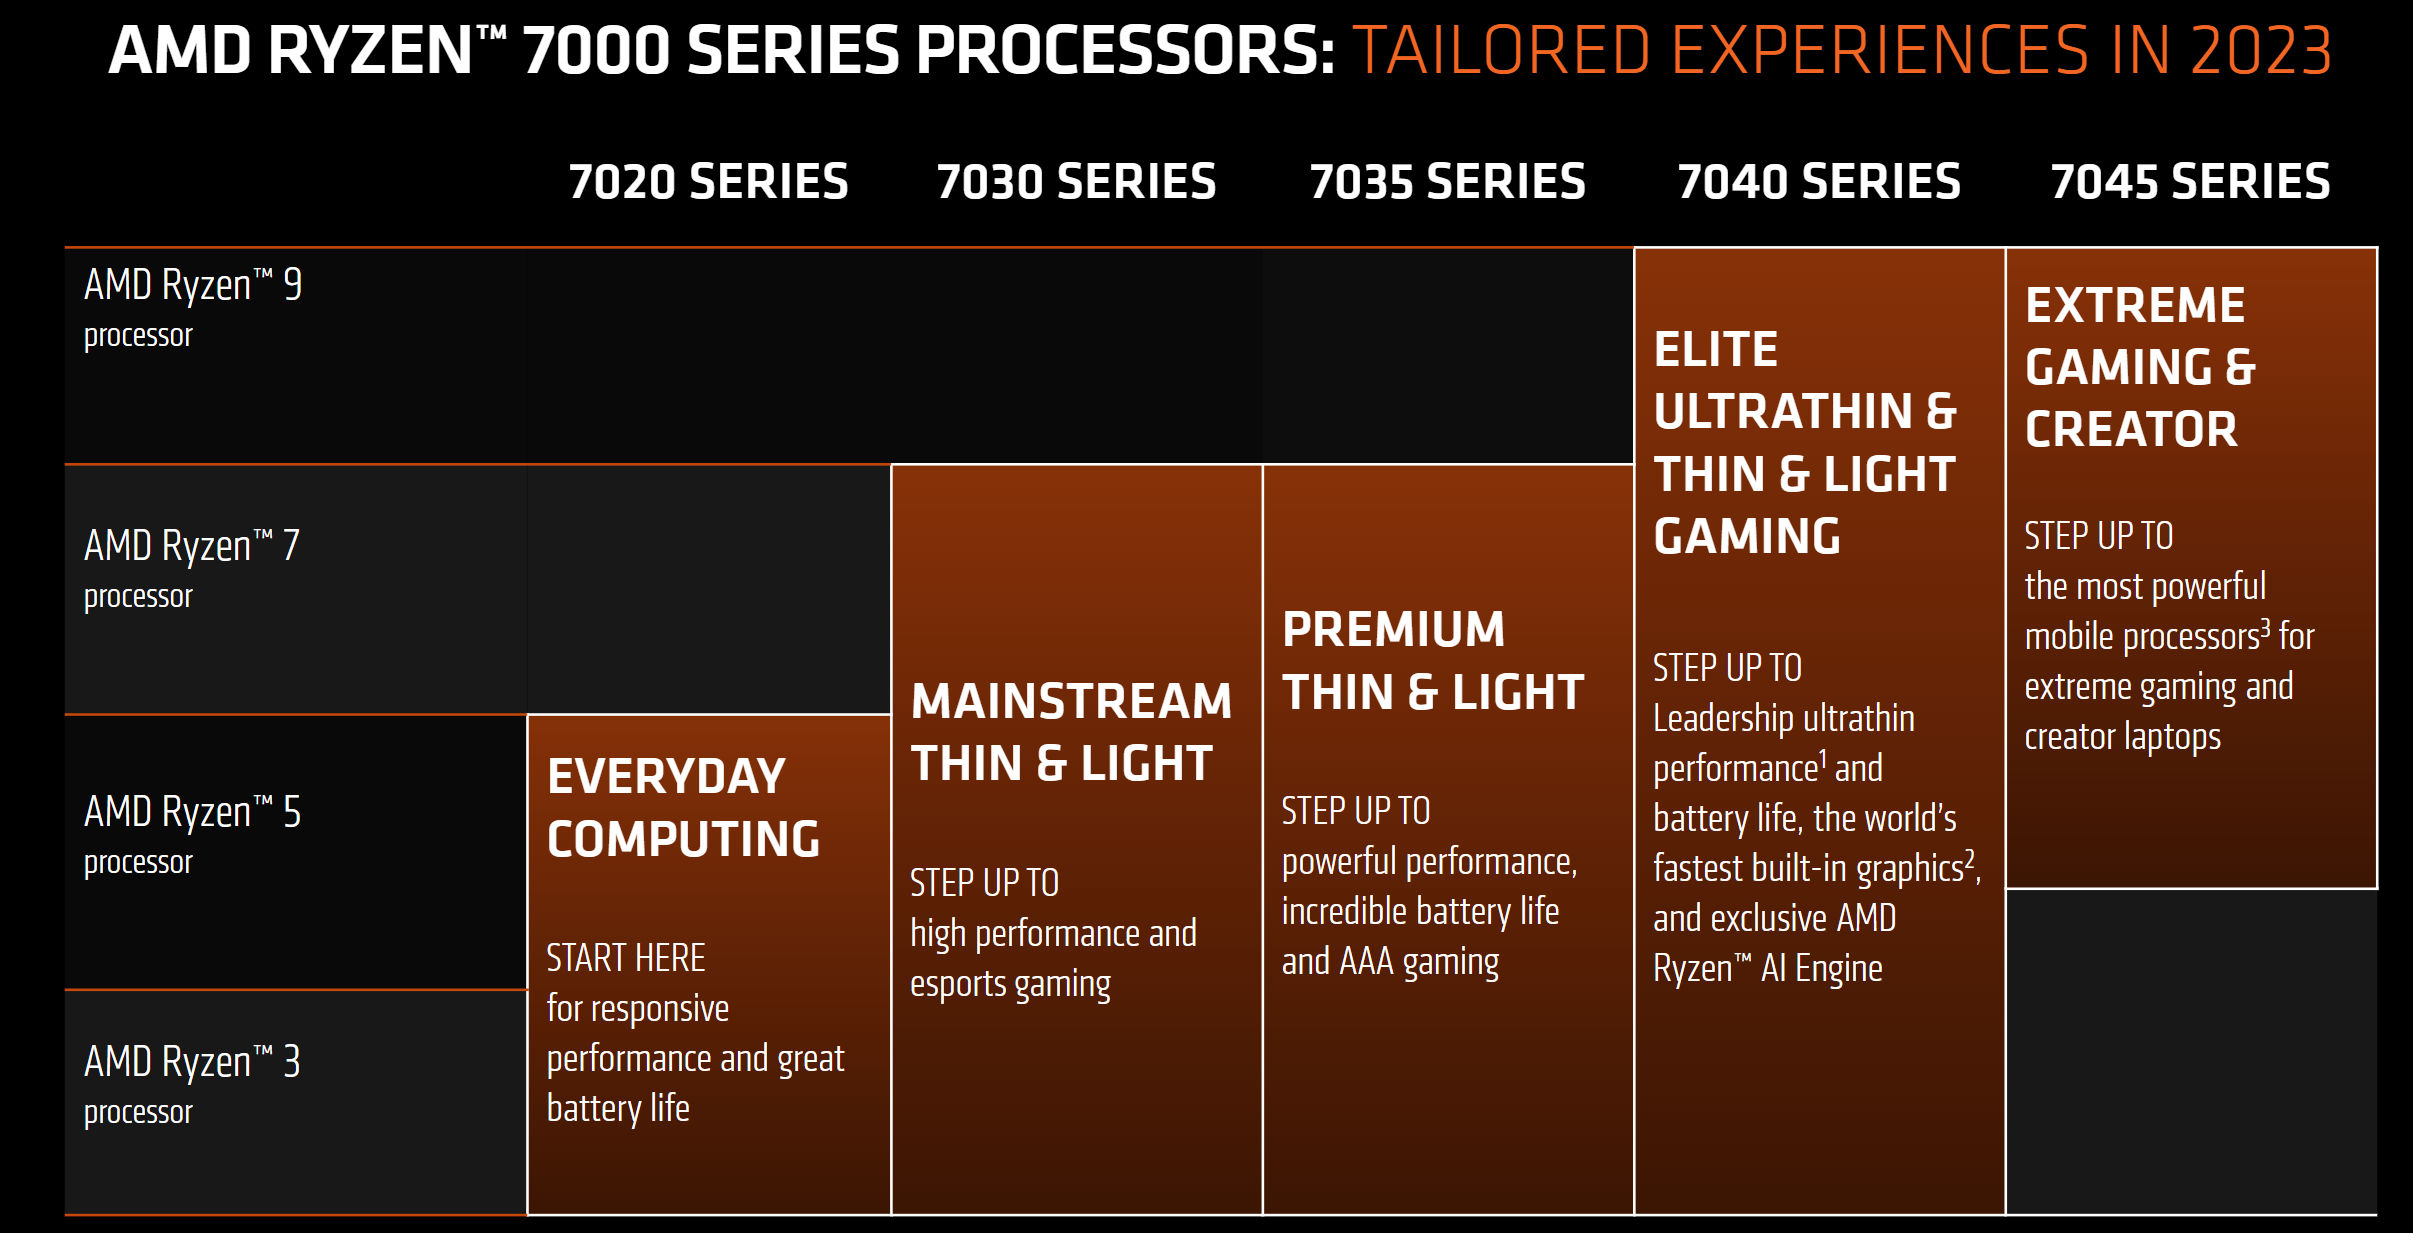 Minisforum 6-liter PCs pack either 24-core Intel 13th Gen Core-HX or  16-core AMD Ryzen 7045HX CPUs 